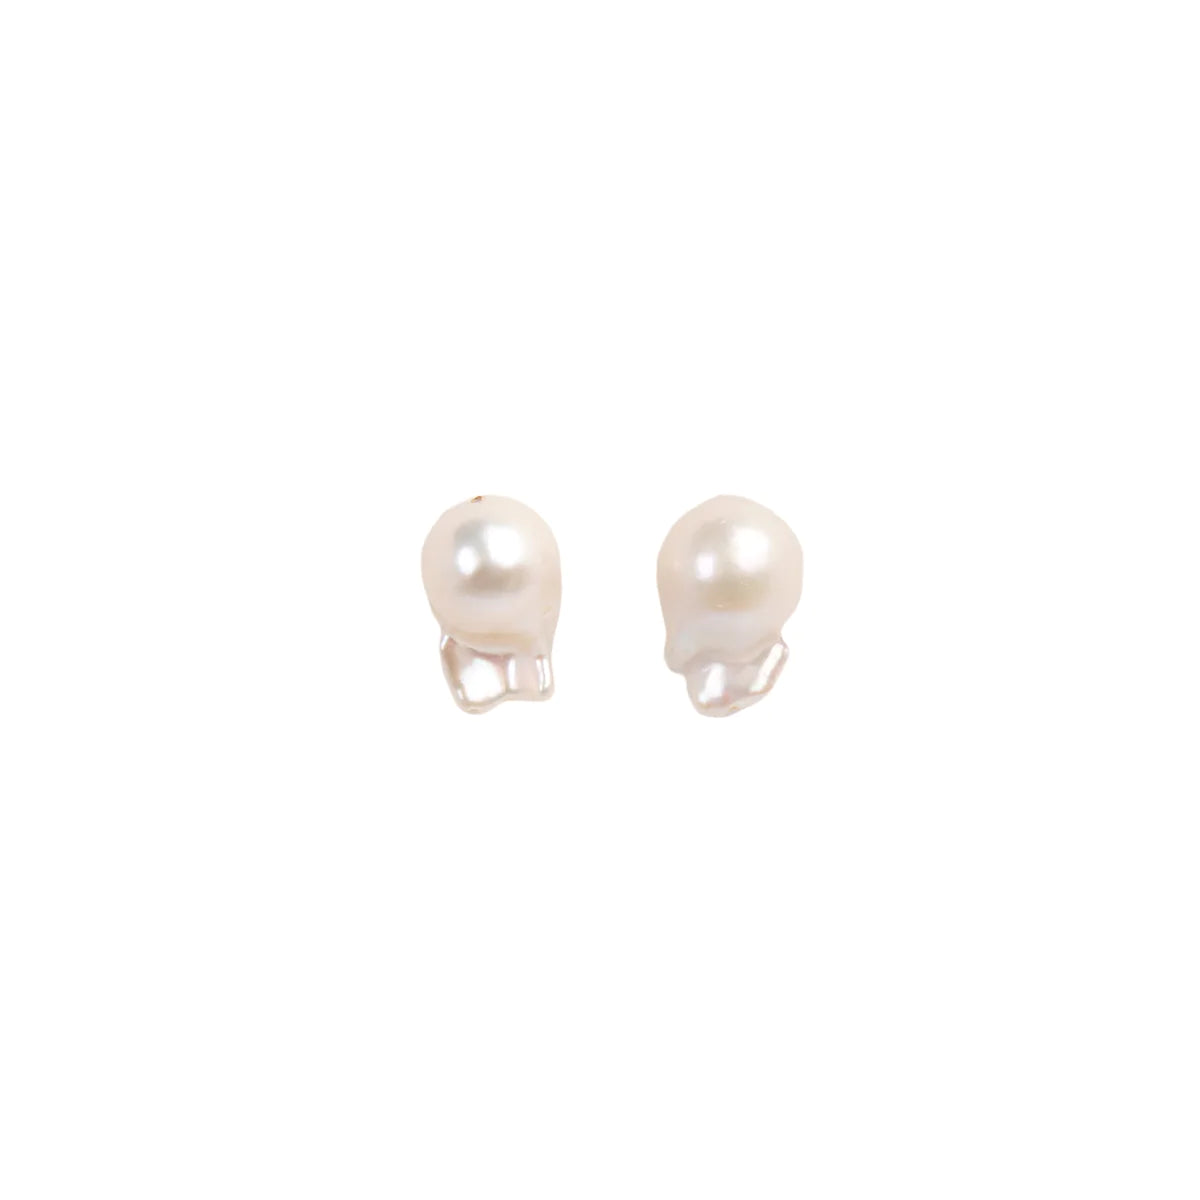 Barroca Earrings #1 (19-20mm) - White Pearl